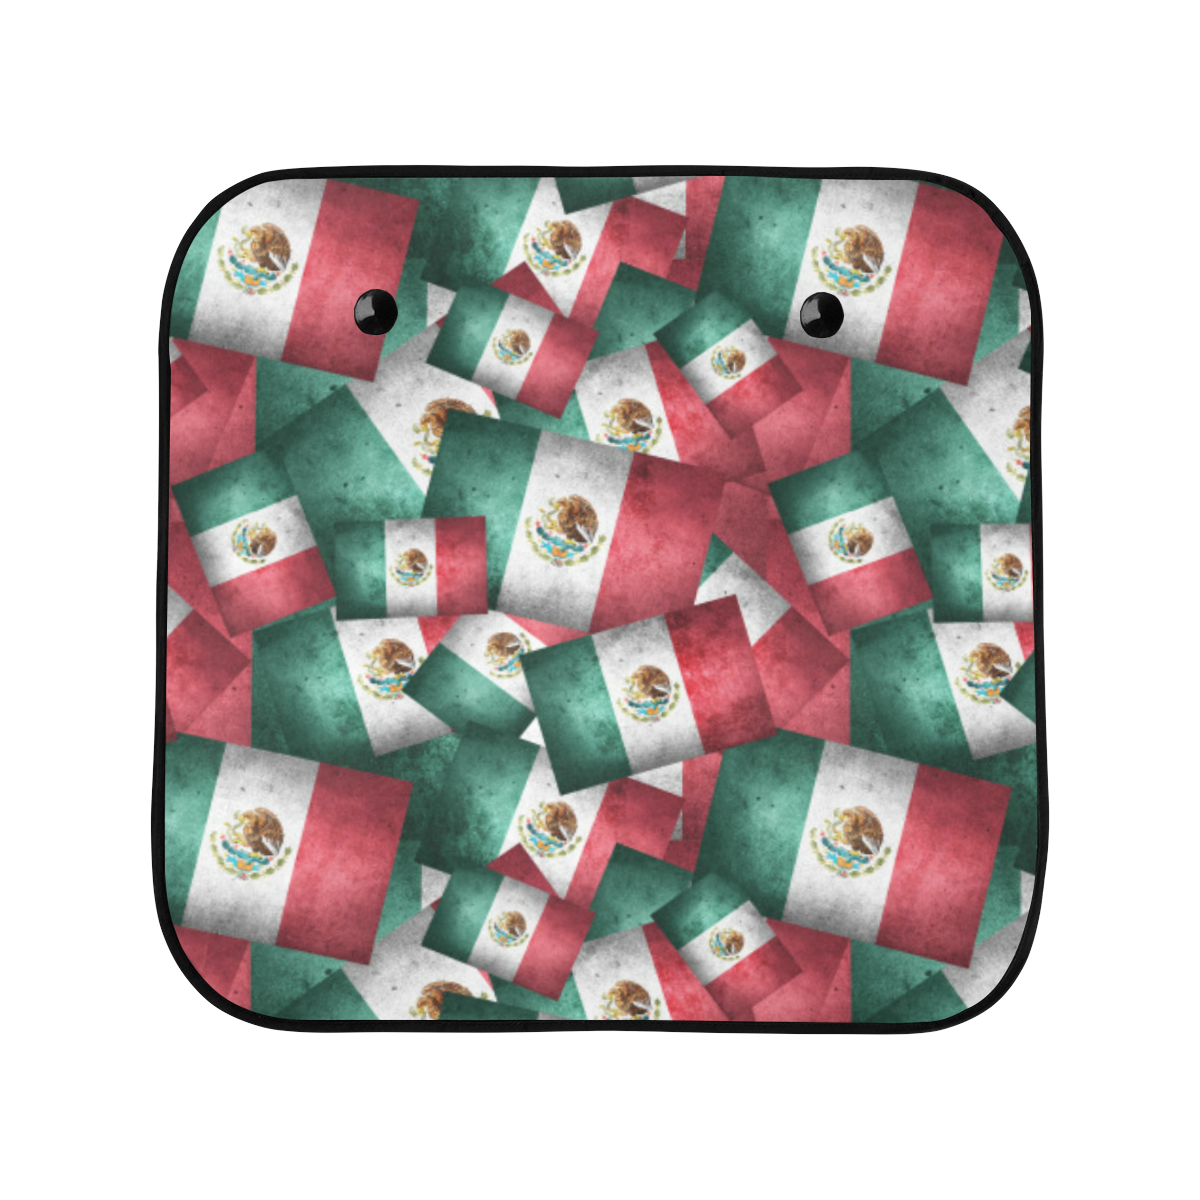 Mexican Pattern - Flags of Mexico Car Sun Shade 28"x28"x2pcs